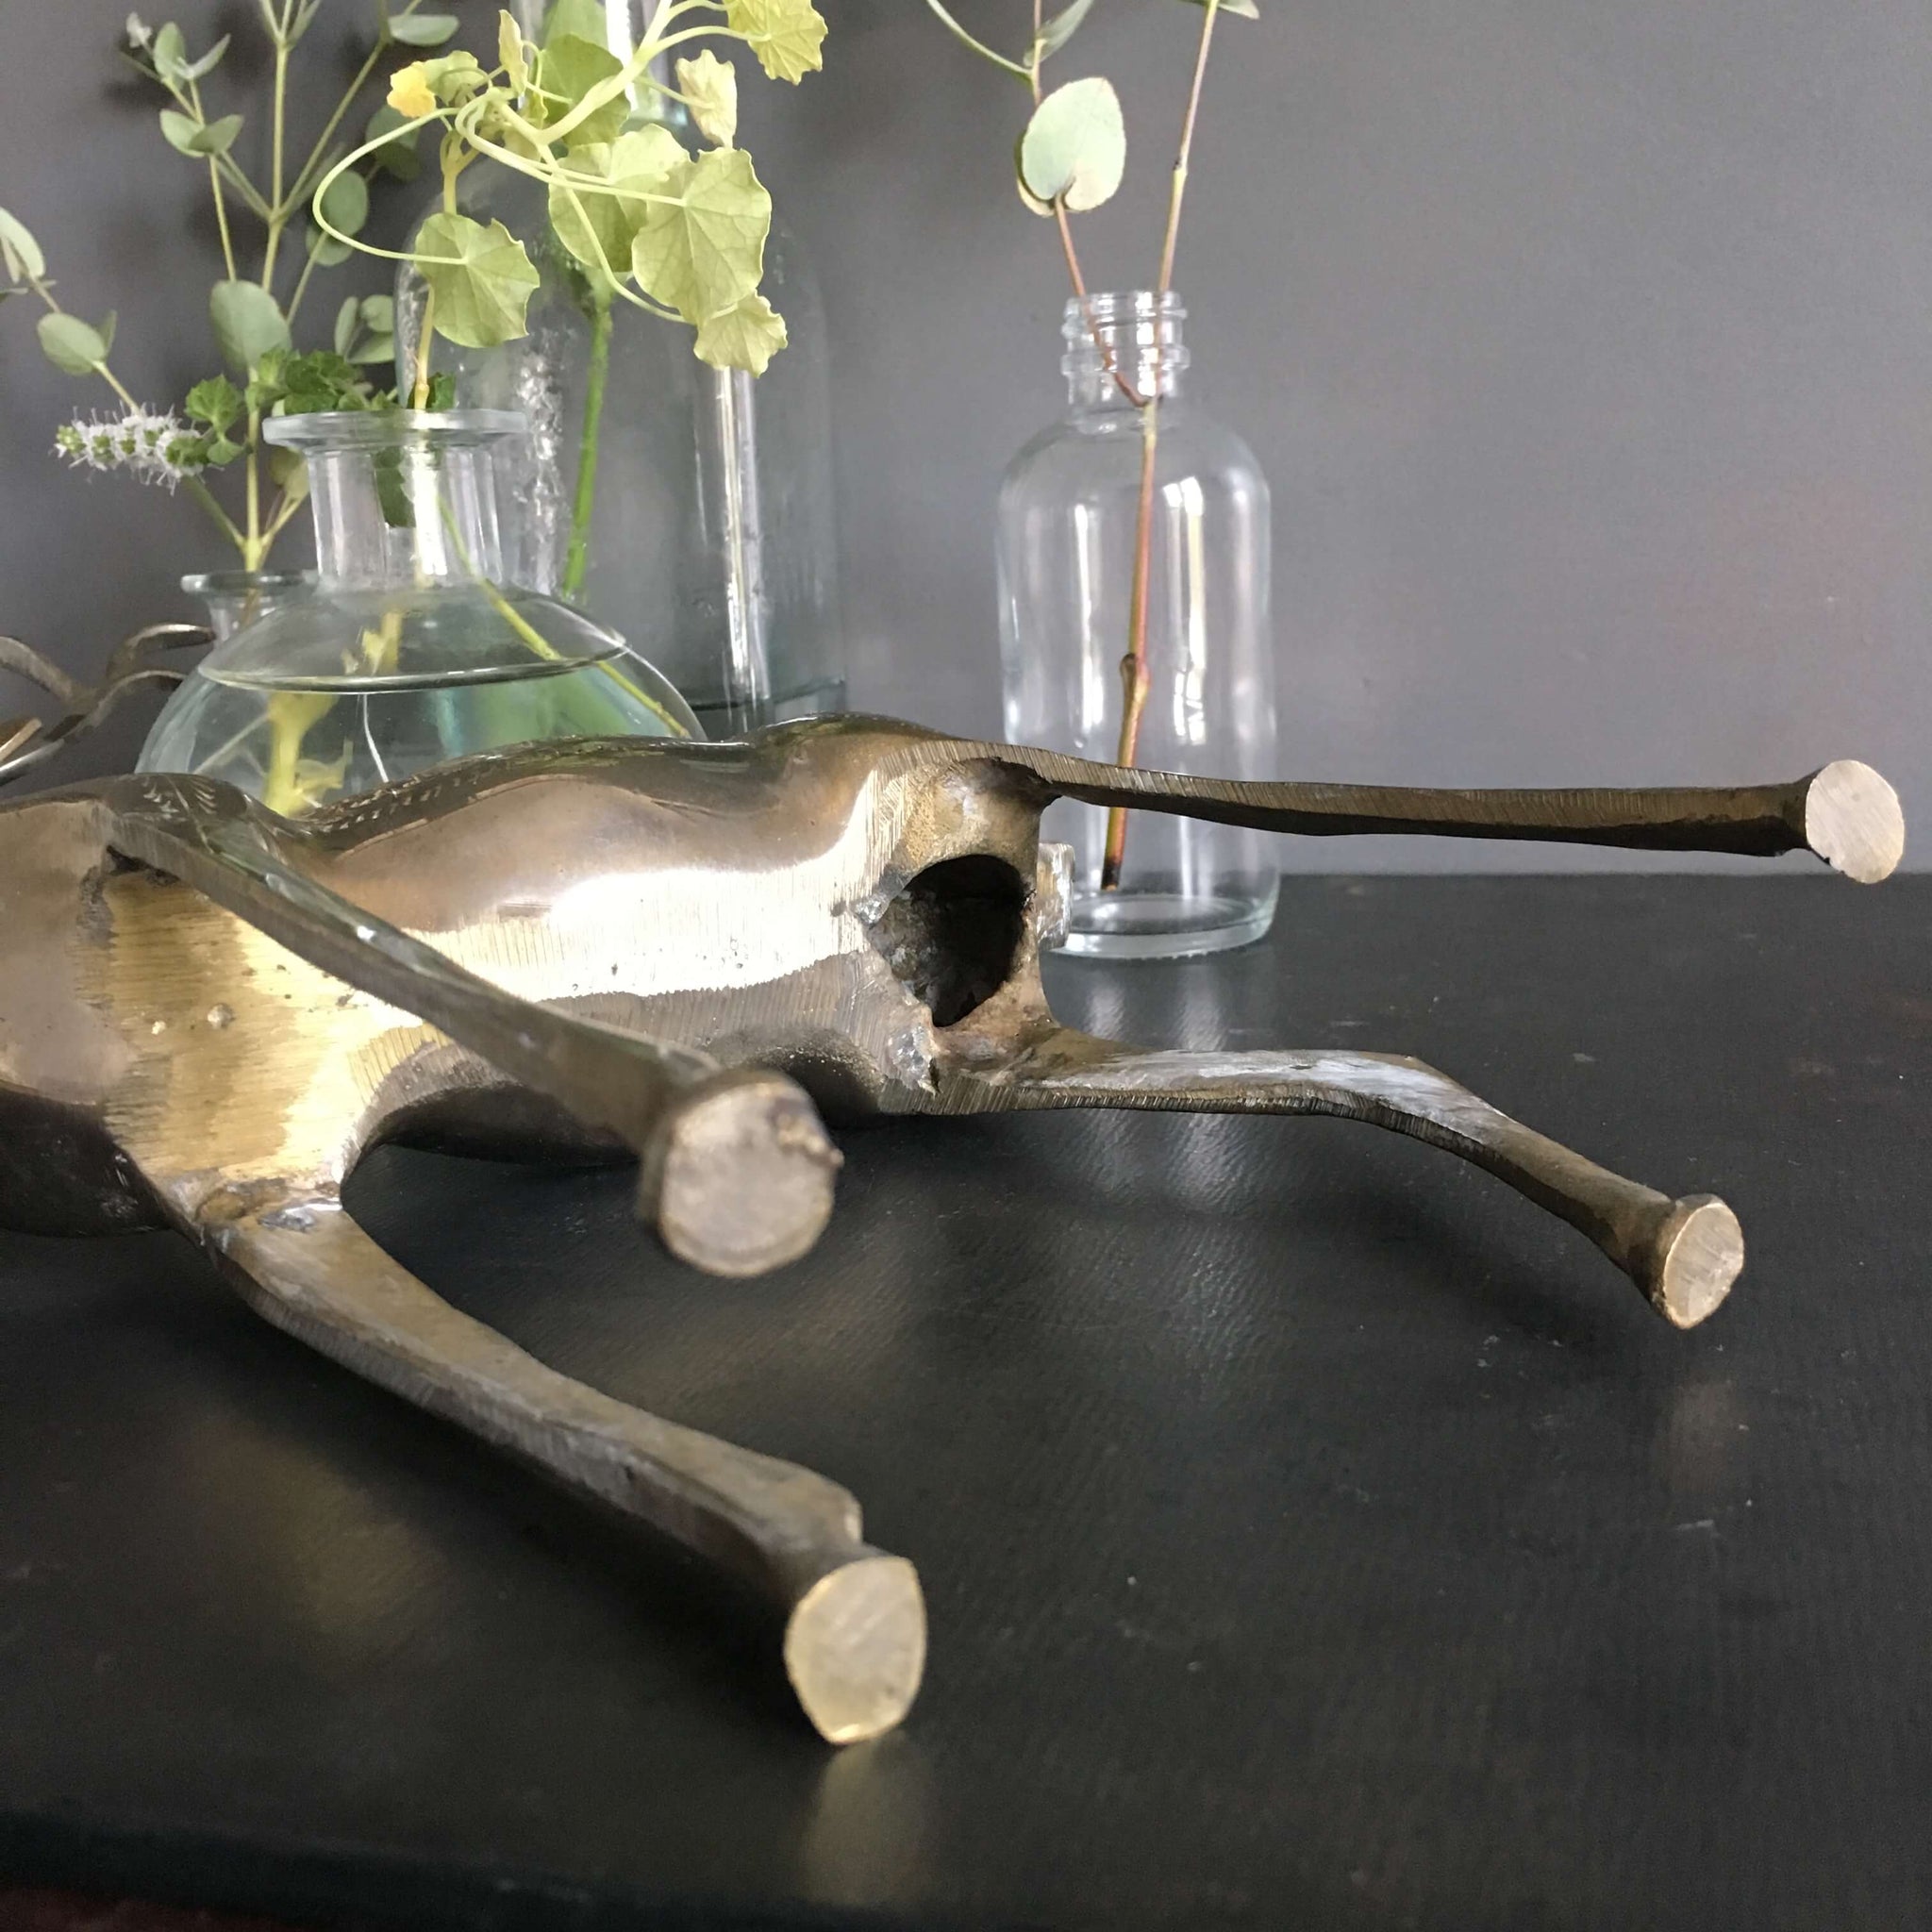 Vintage Nickel Plated Brass Deer Figurine with Etched Design